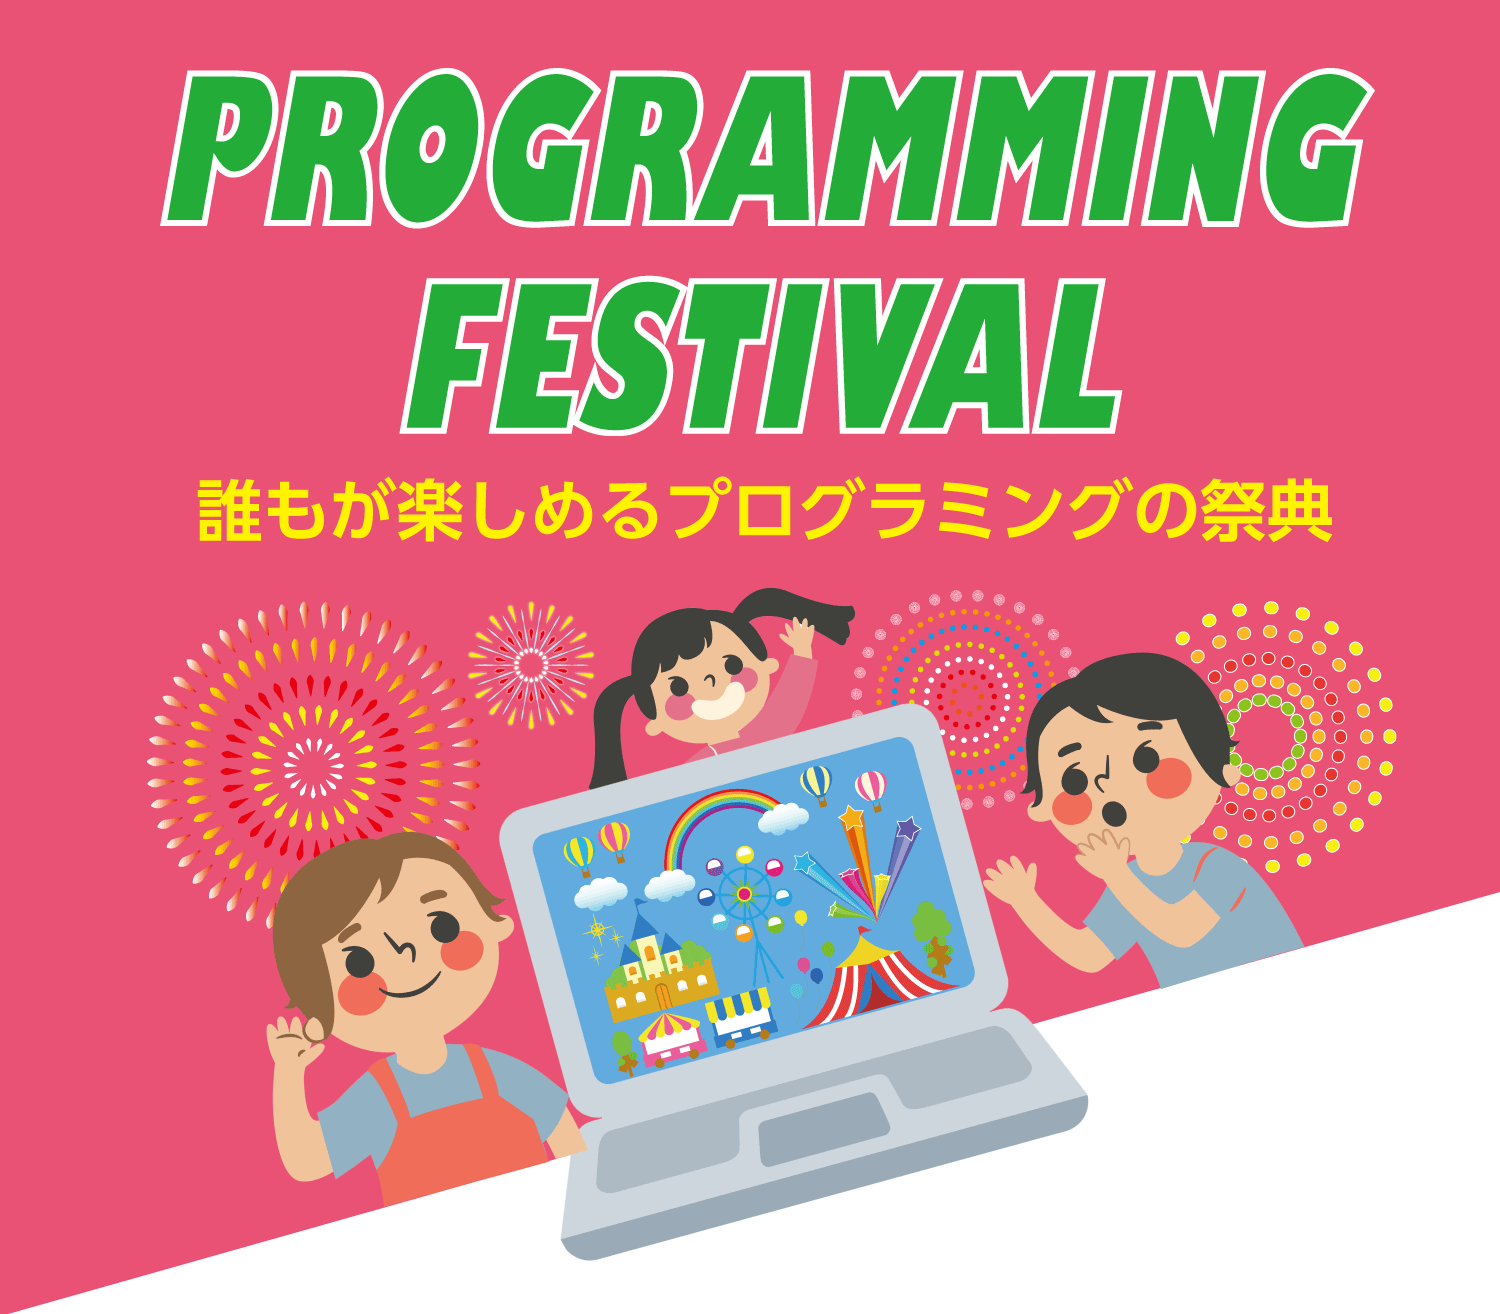 Programming Festival